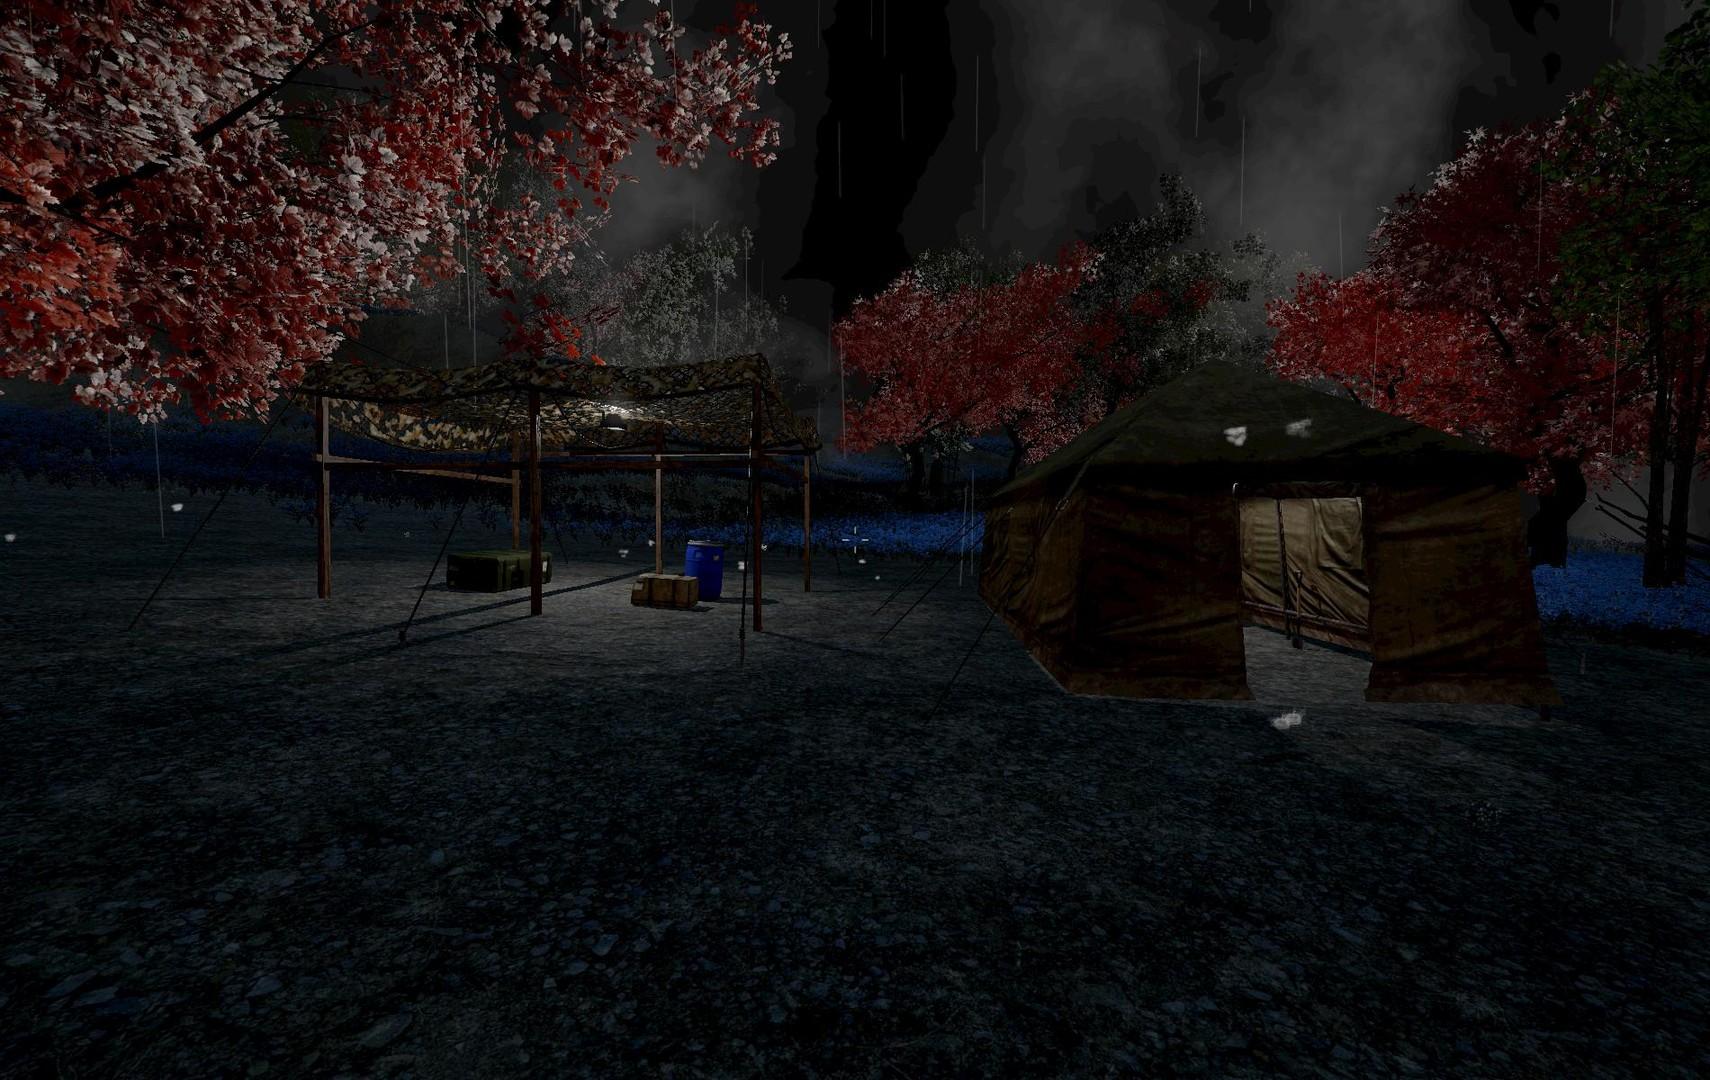 Screenshot №1 from game Red Wake Carnage